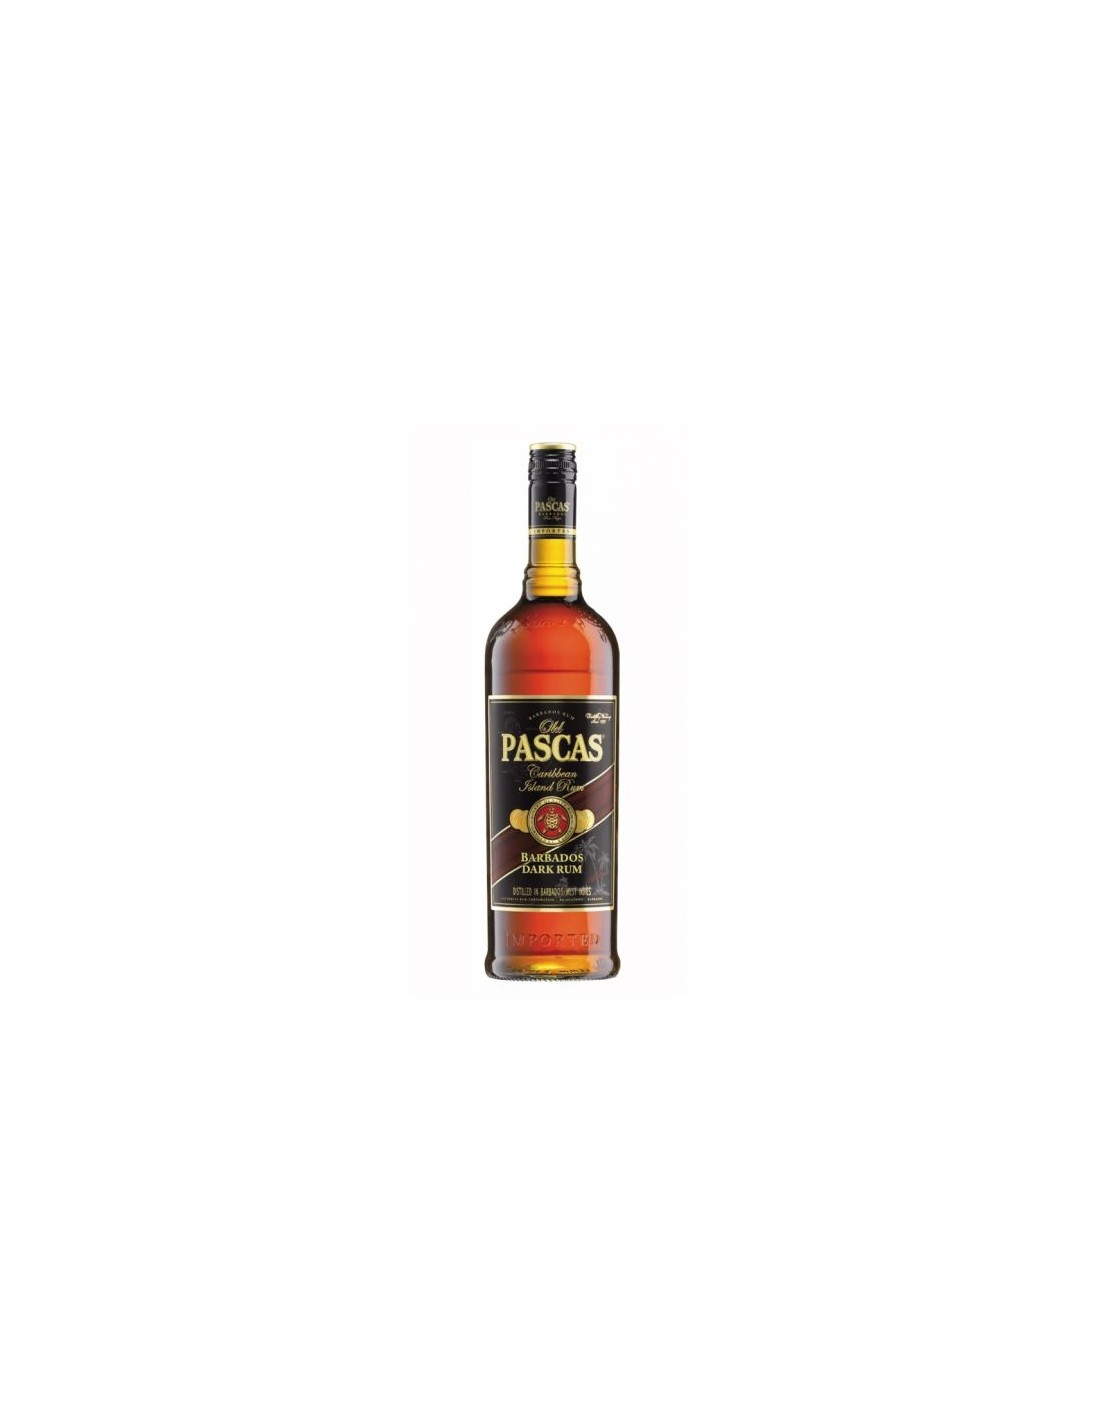 Rom negru Old Pascas Dark, 37.5% alc., 0.7L, Barbados alcooldiscount.ro